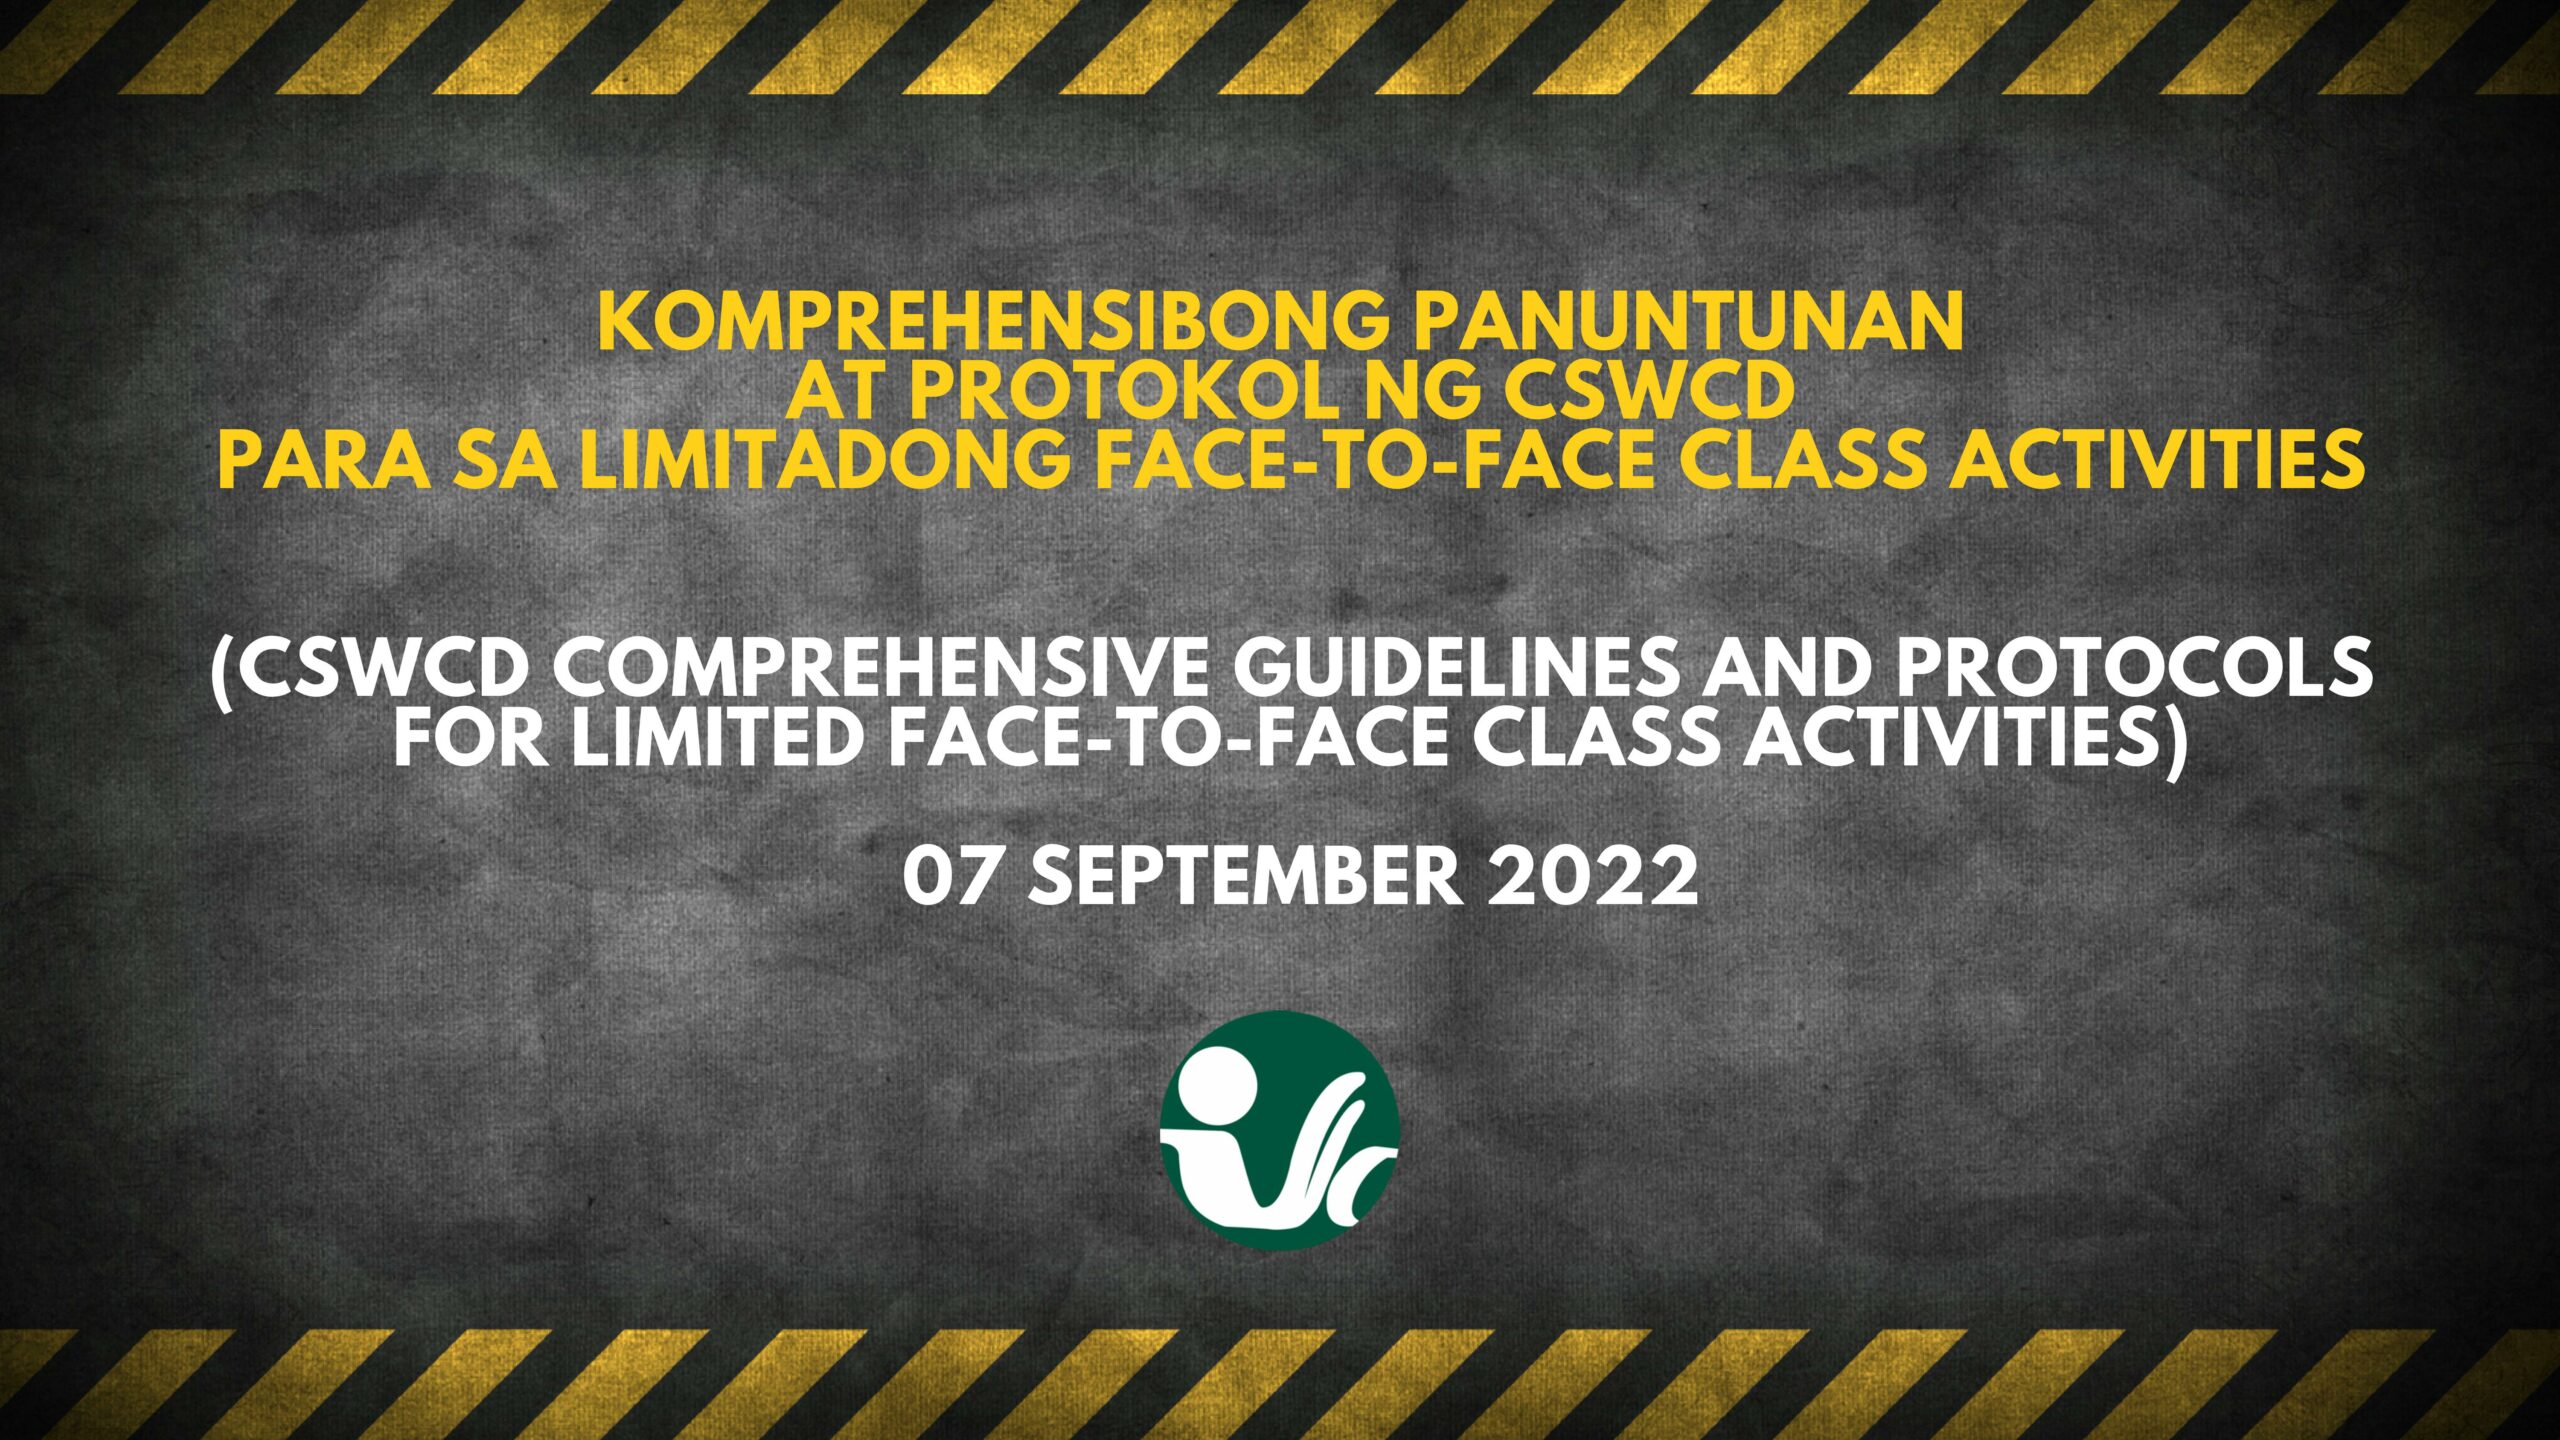 Komprehensibong Panuntunan at Protokol ng CSWCD para sa Limitadong Face-to-Face Class Activities